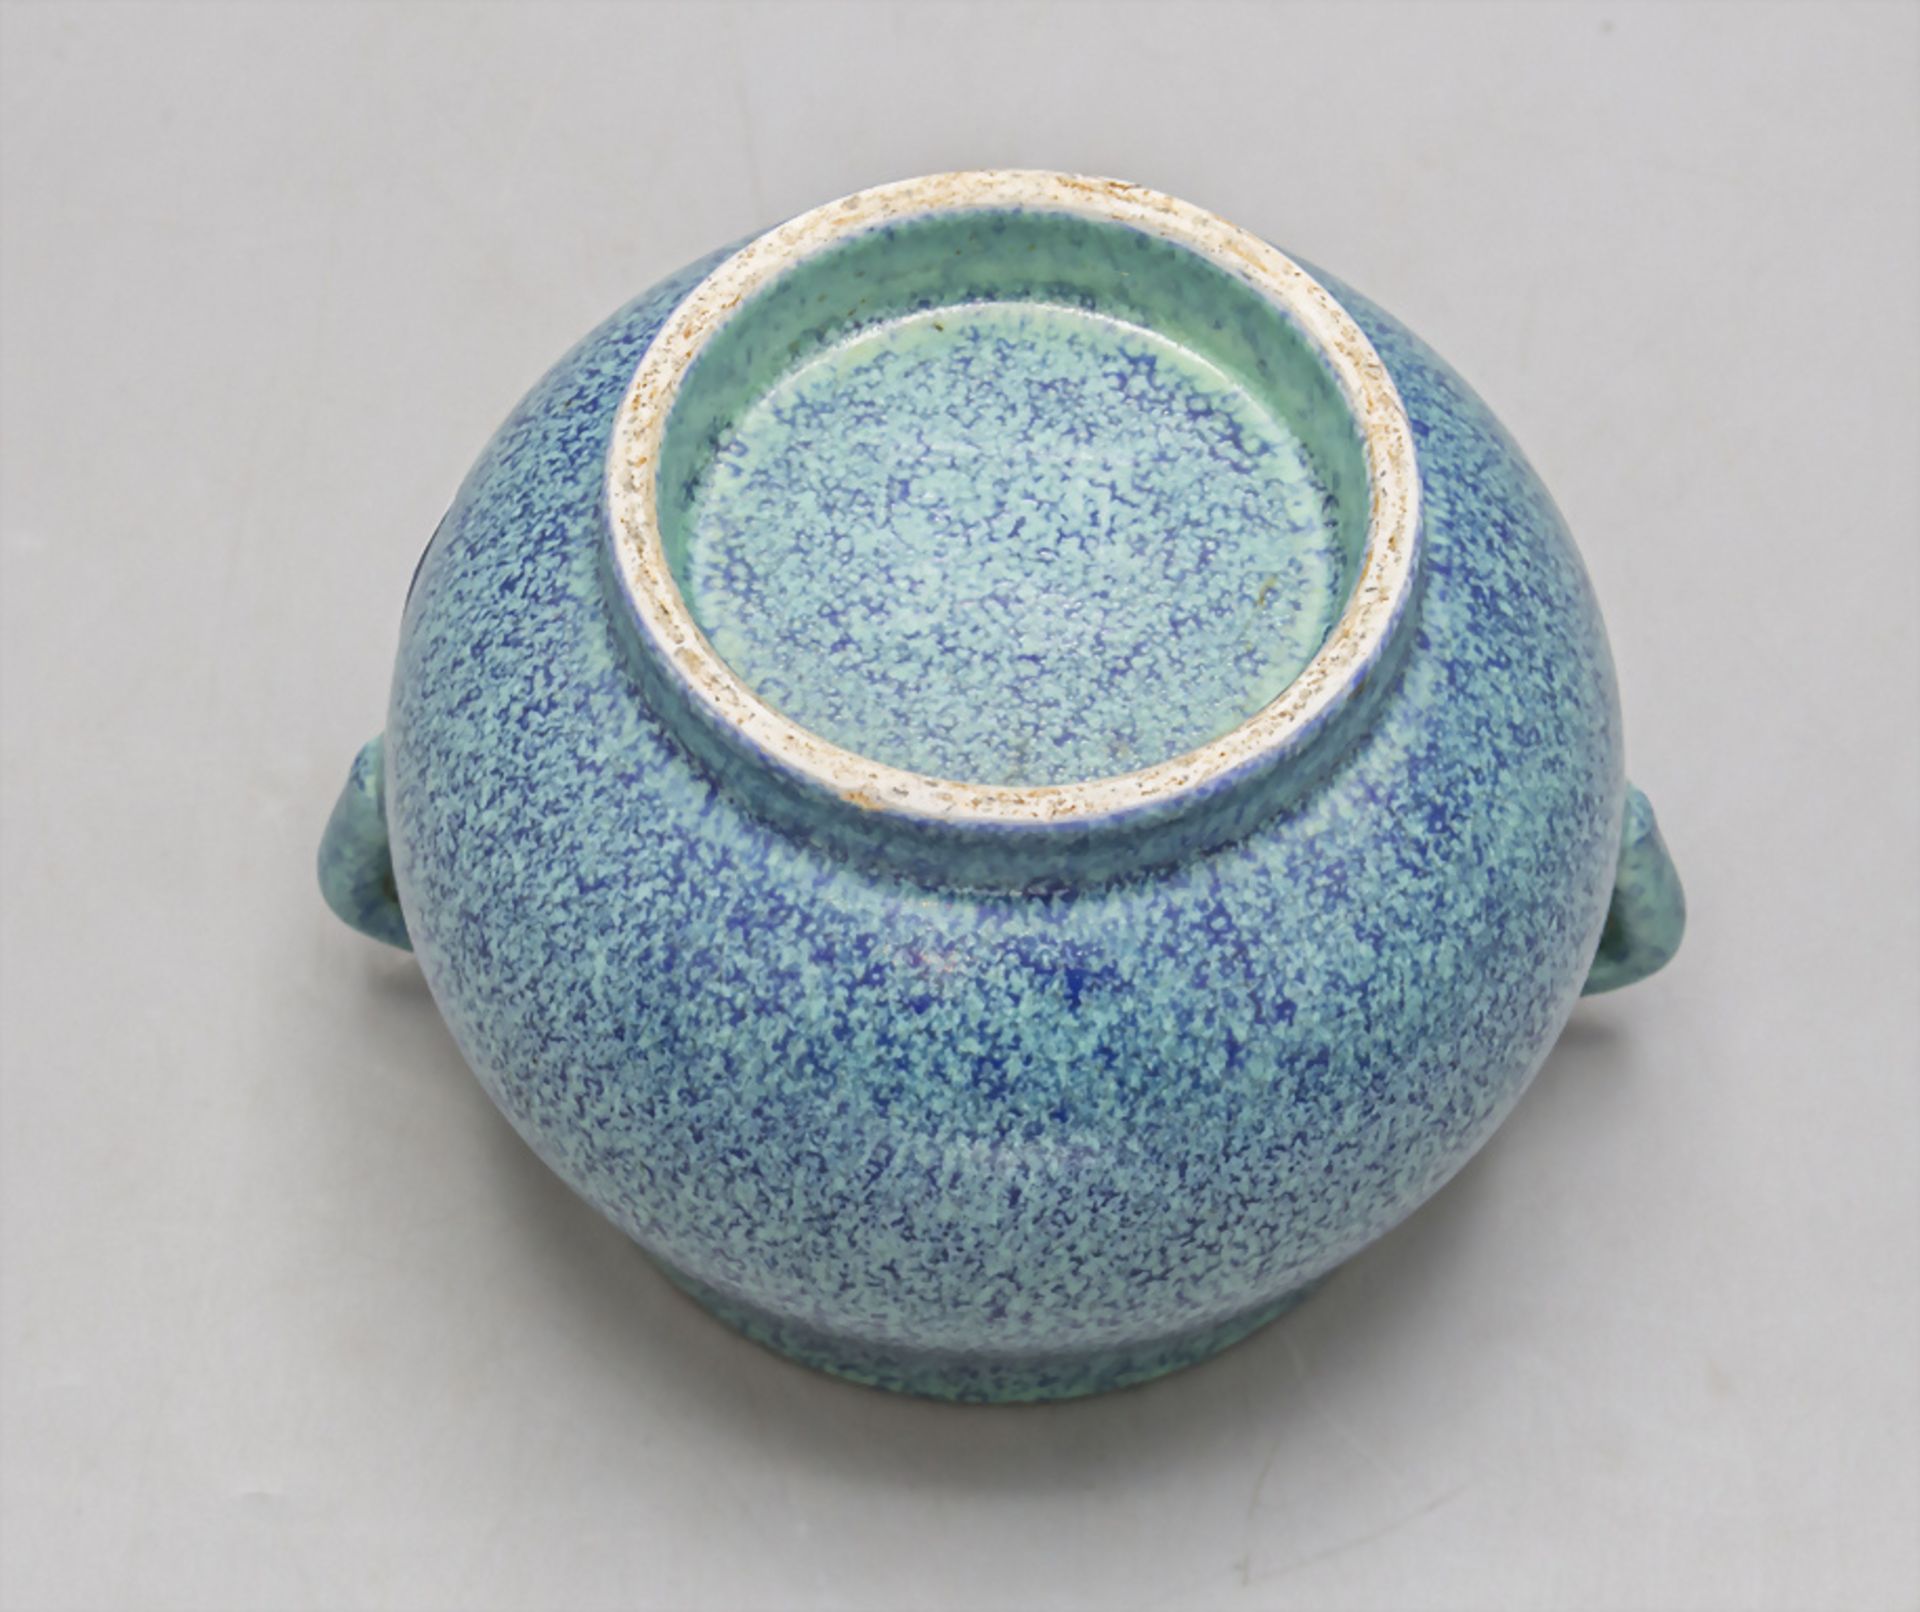 Blaues Henkelgefäß / A blue pot with handles, China, 20. Jh. - Bild 3 aus 3